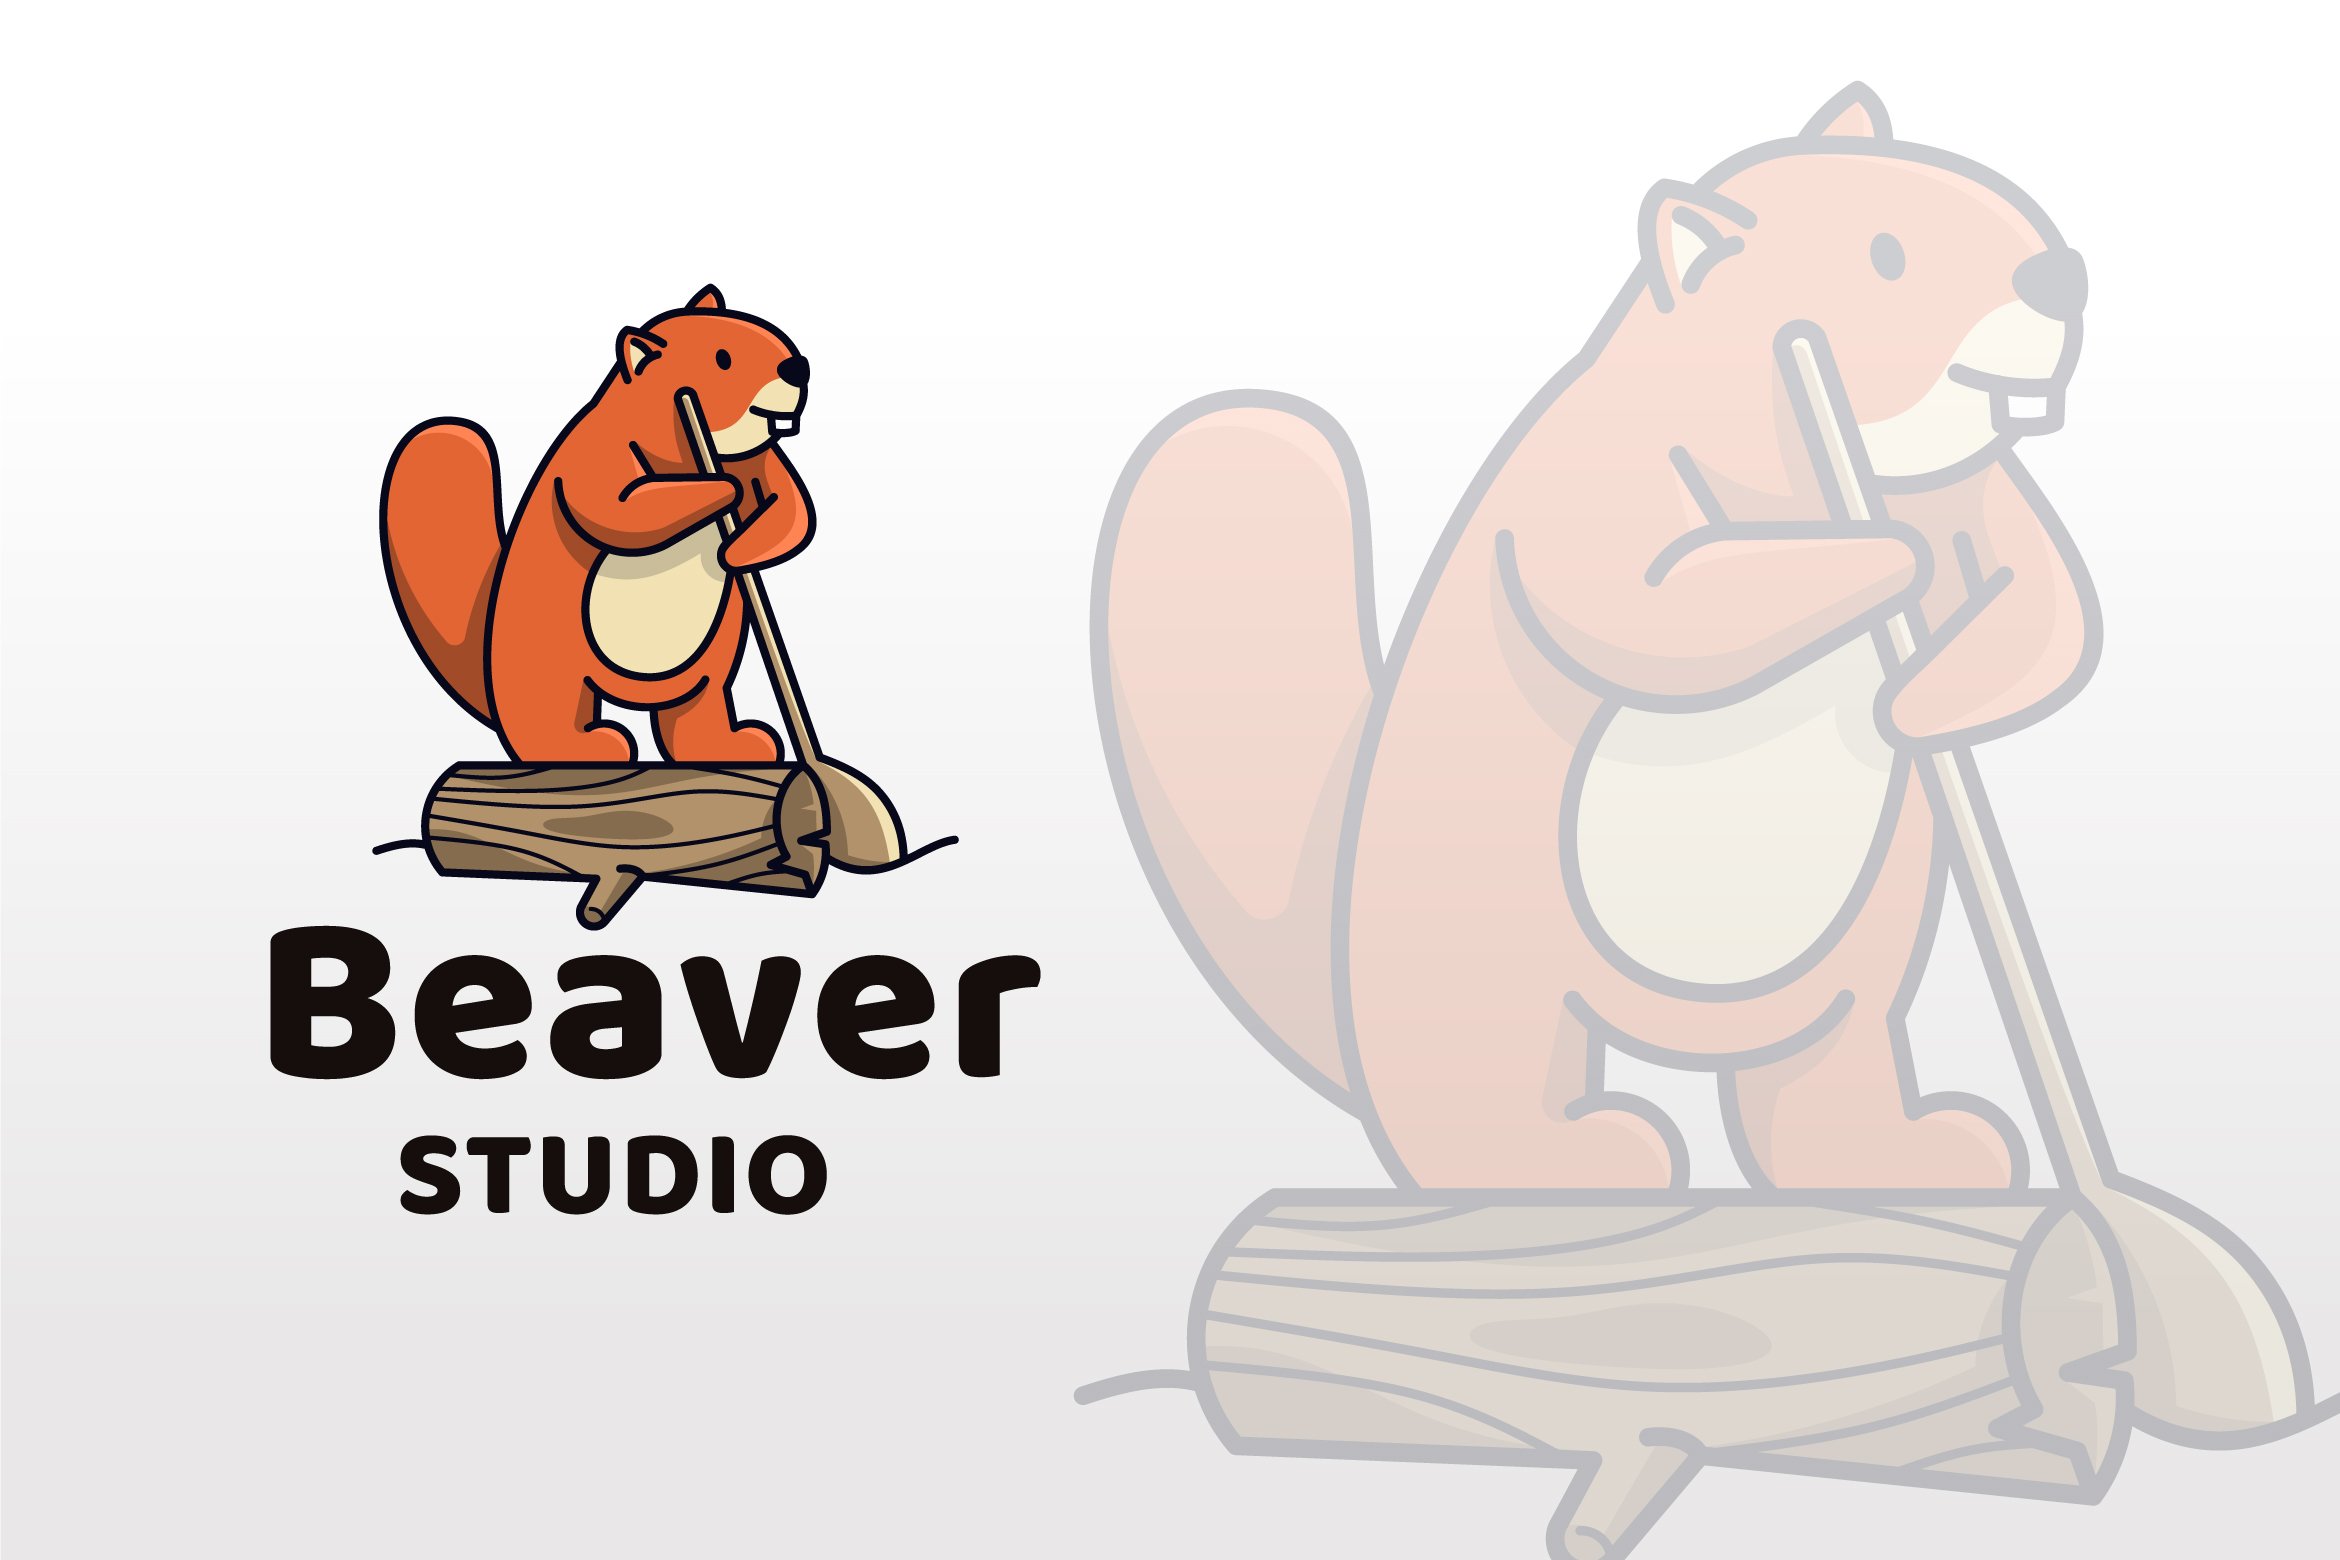 Beaver Studio Logo Template cover image.